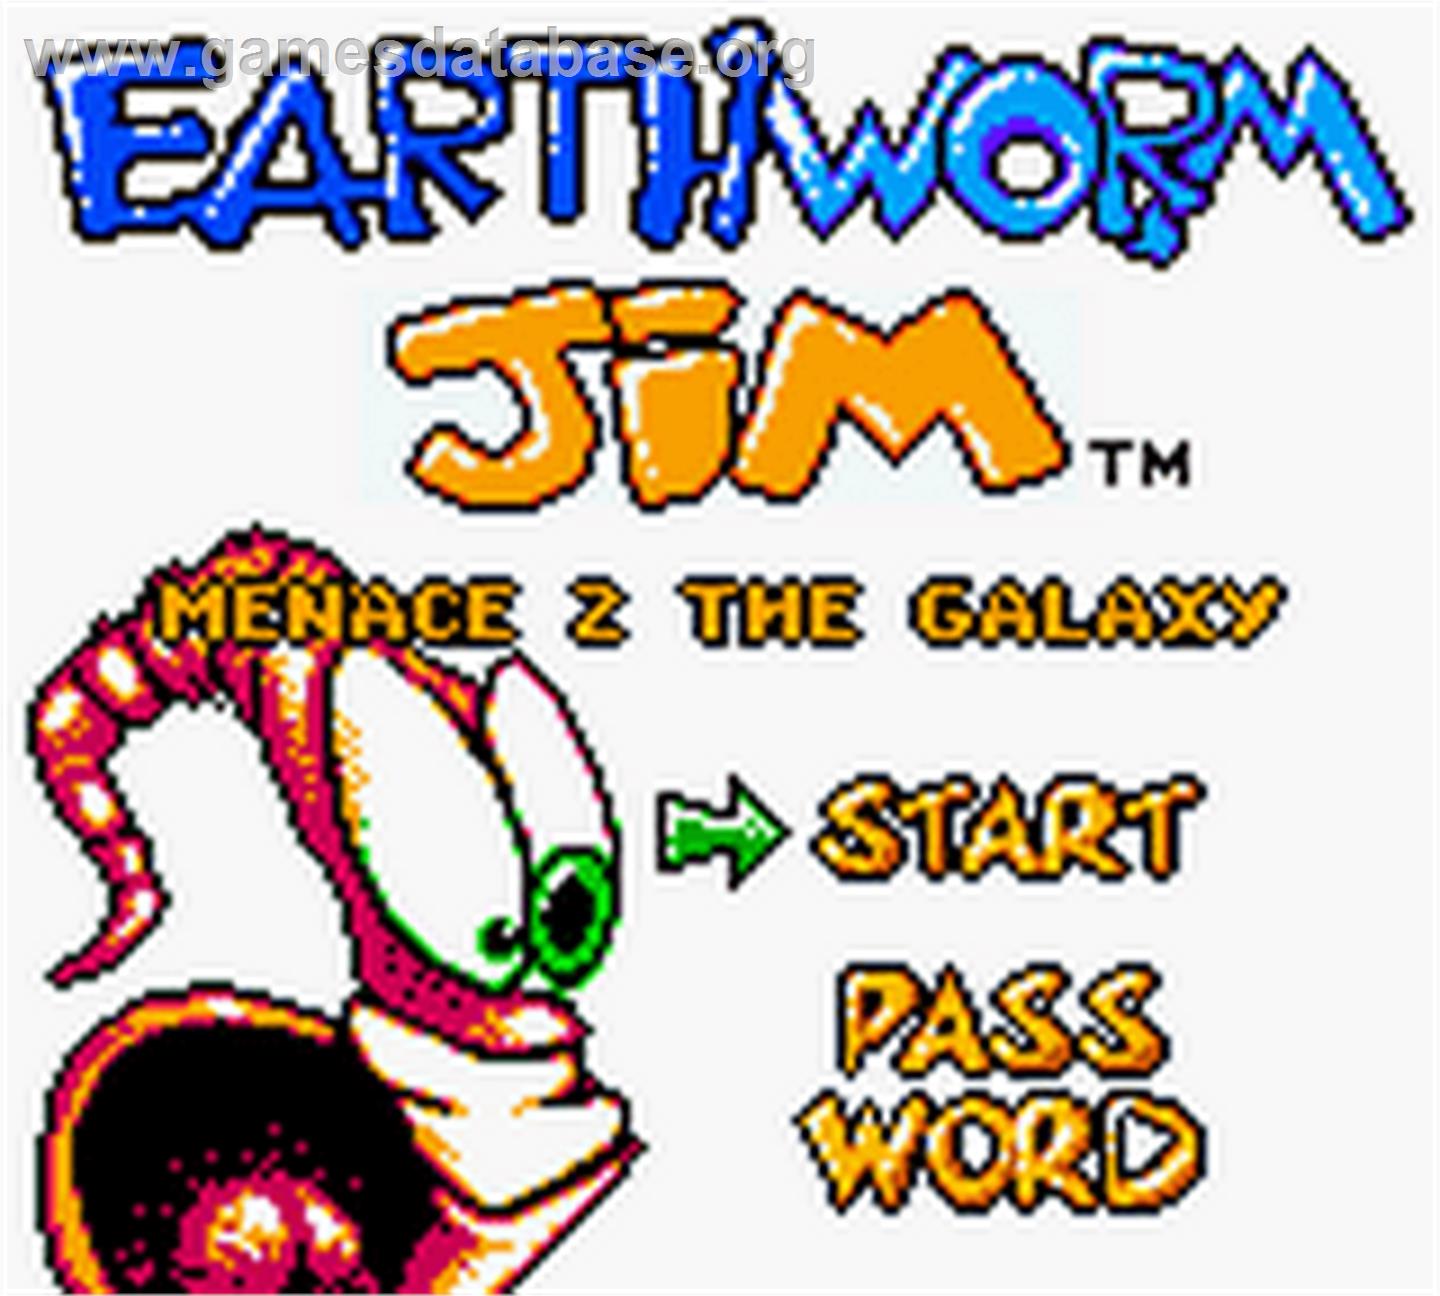 Earthworm Jim: Menace 2 the Galaxy - Nintendo Game Boy Color - Artwork - Title Screen